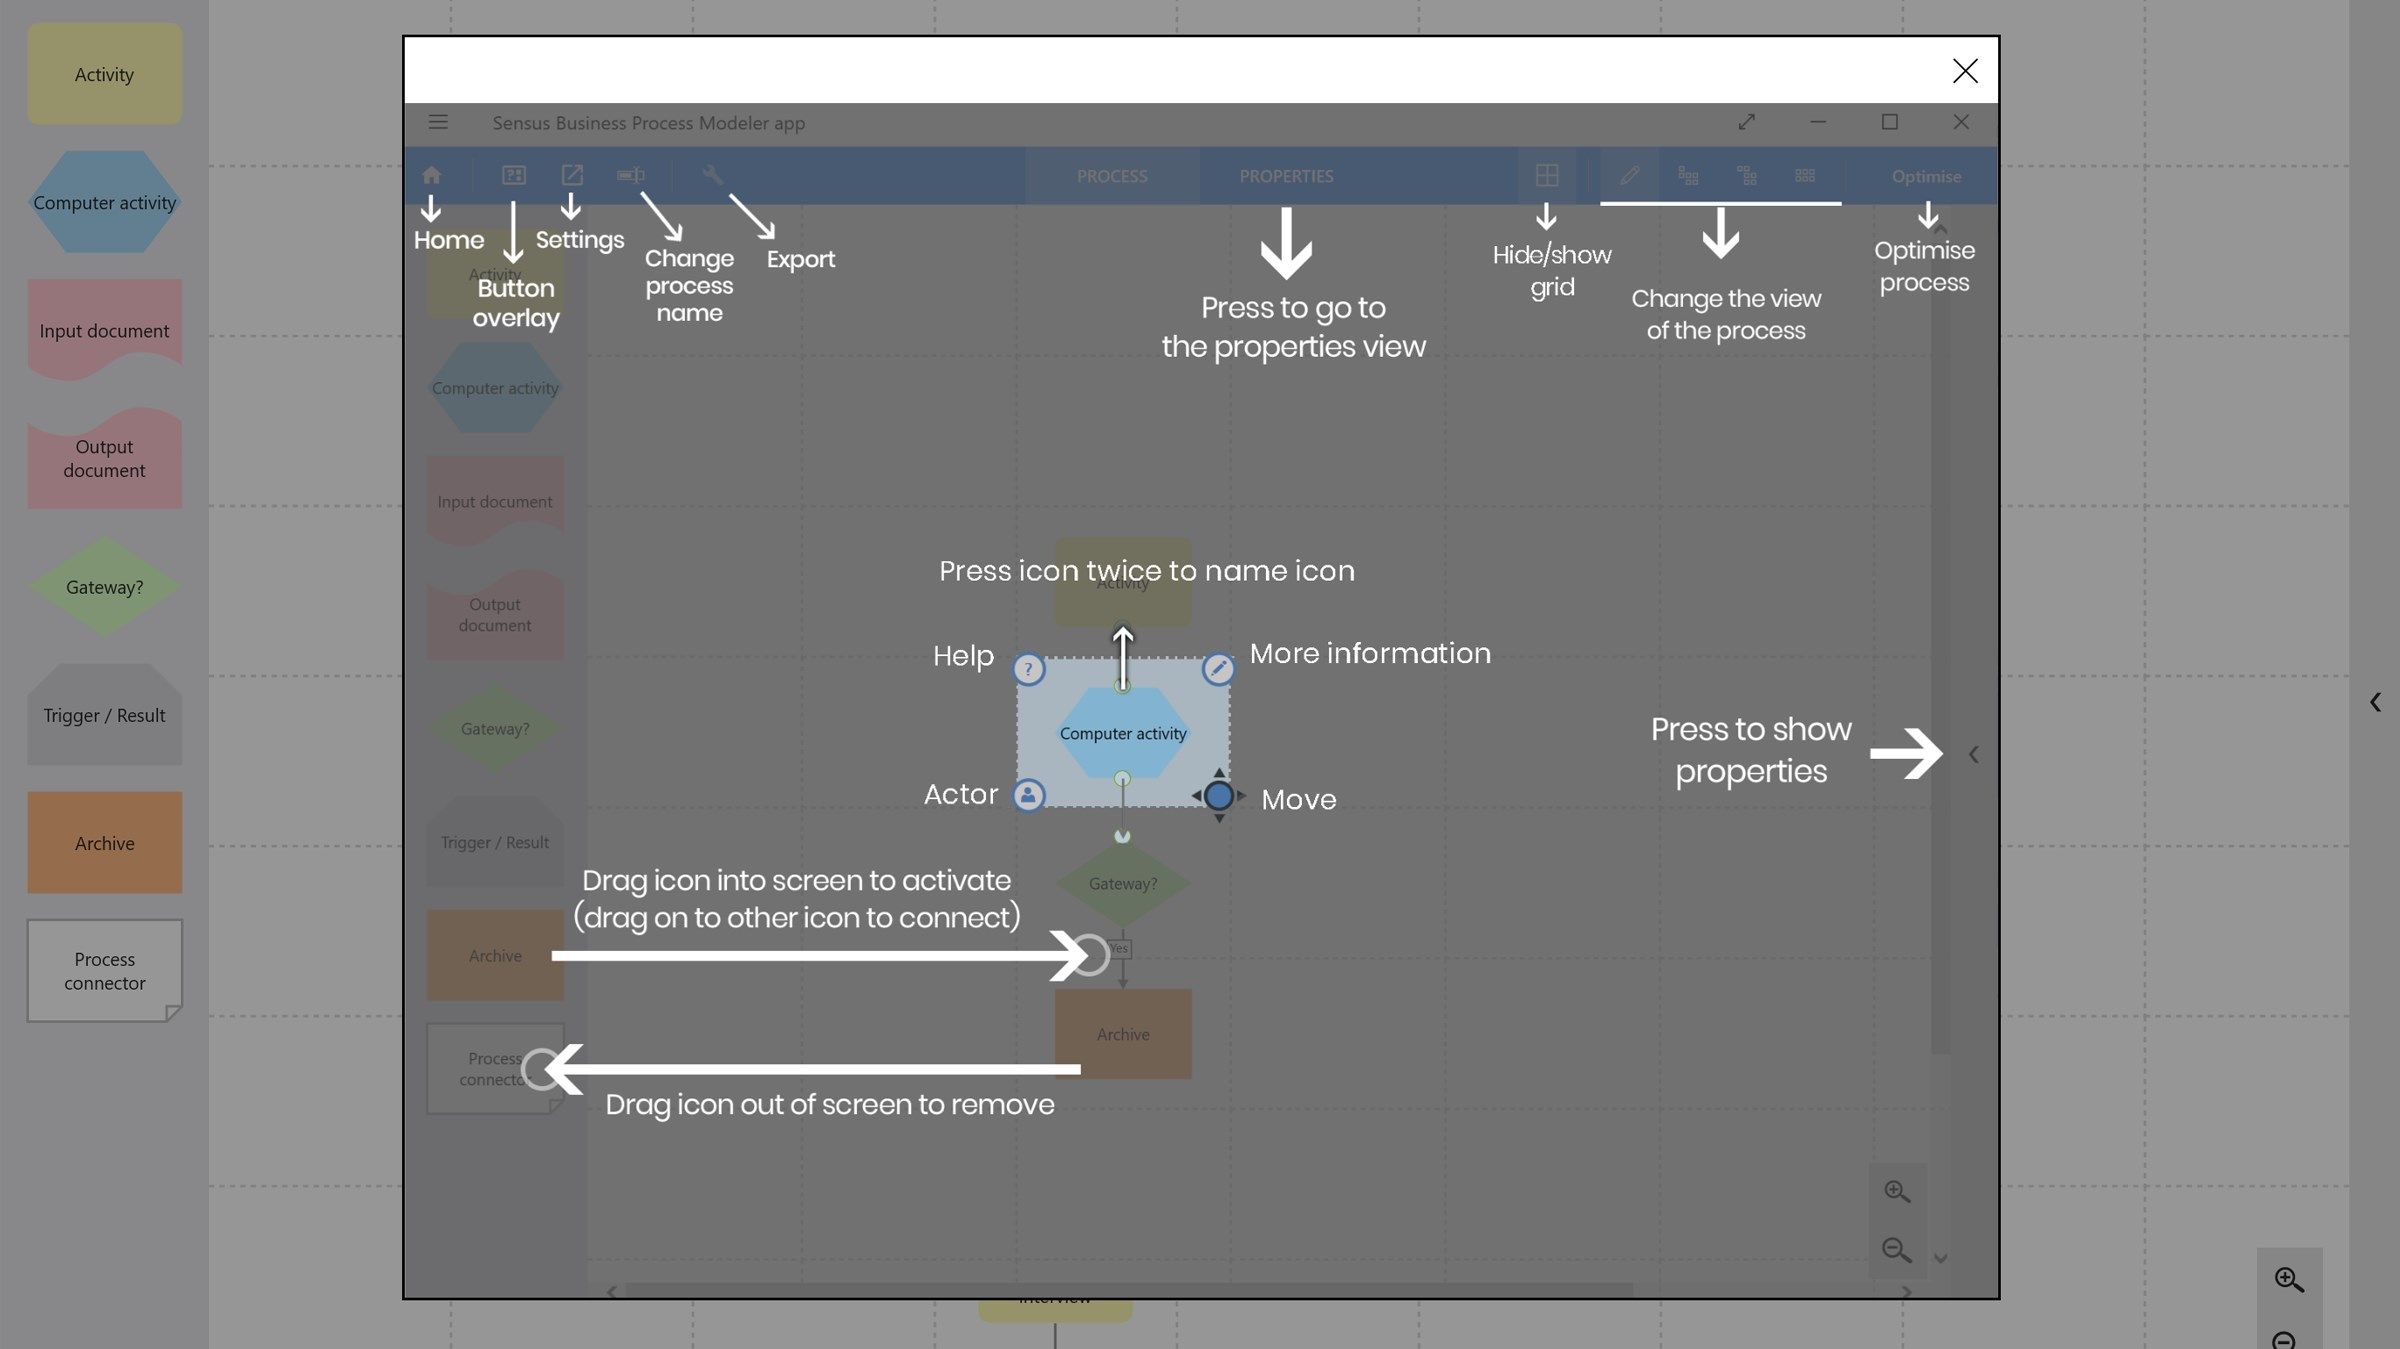 Sensus Business Process Modeler app